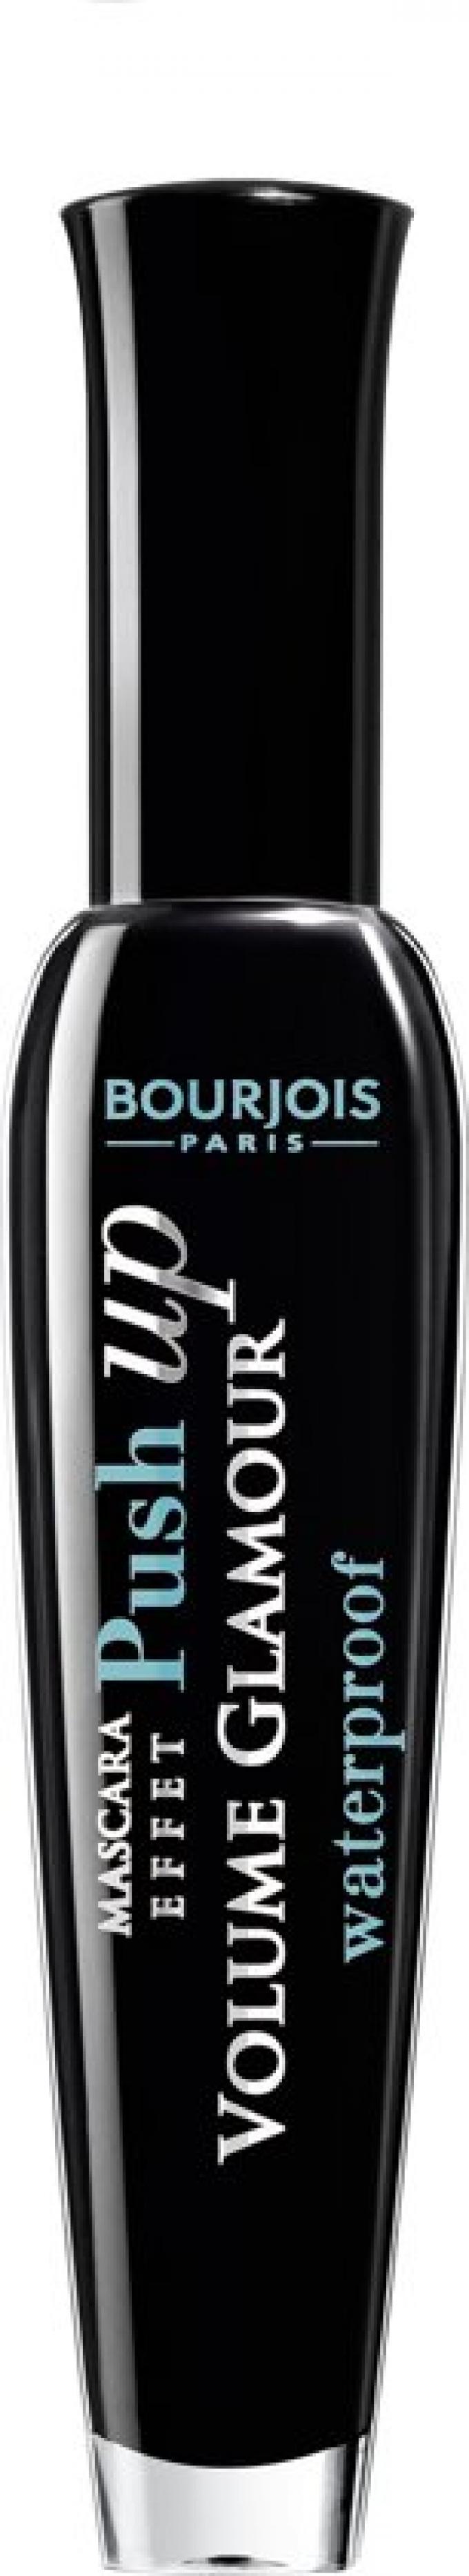 Volume Glamour Push Up de Bourjois